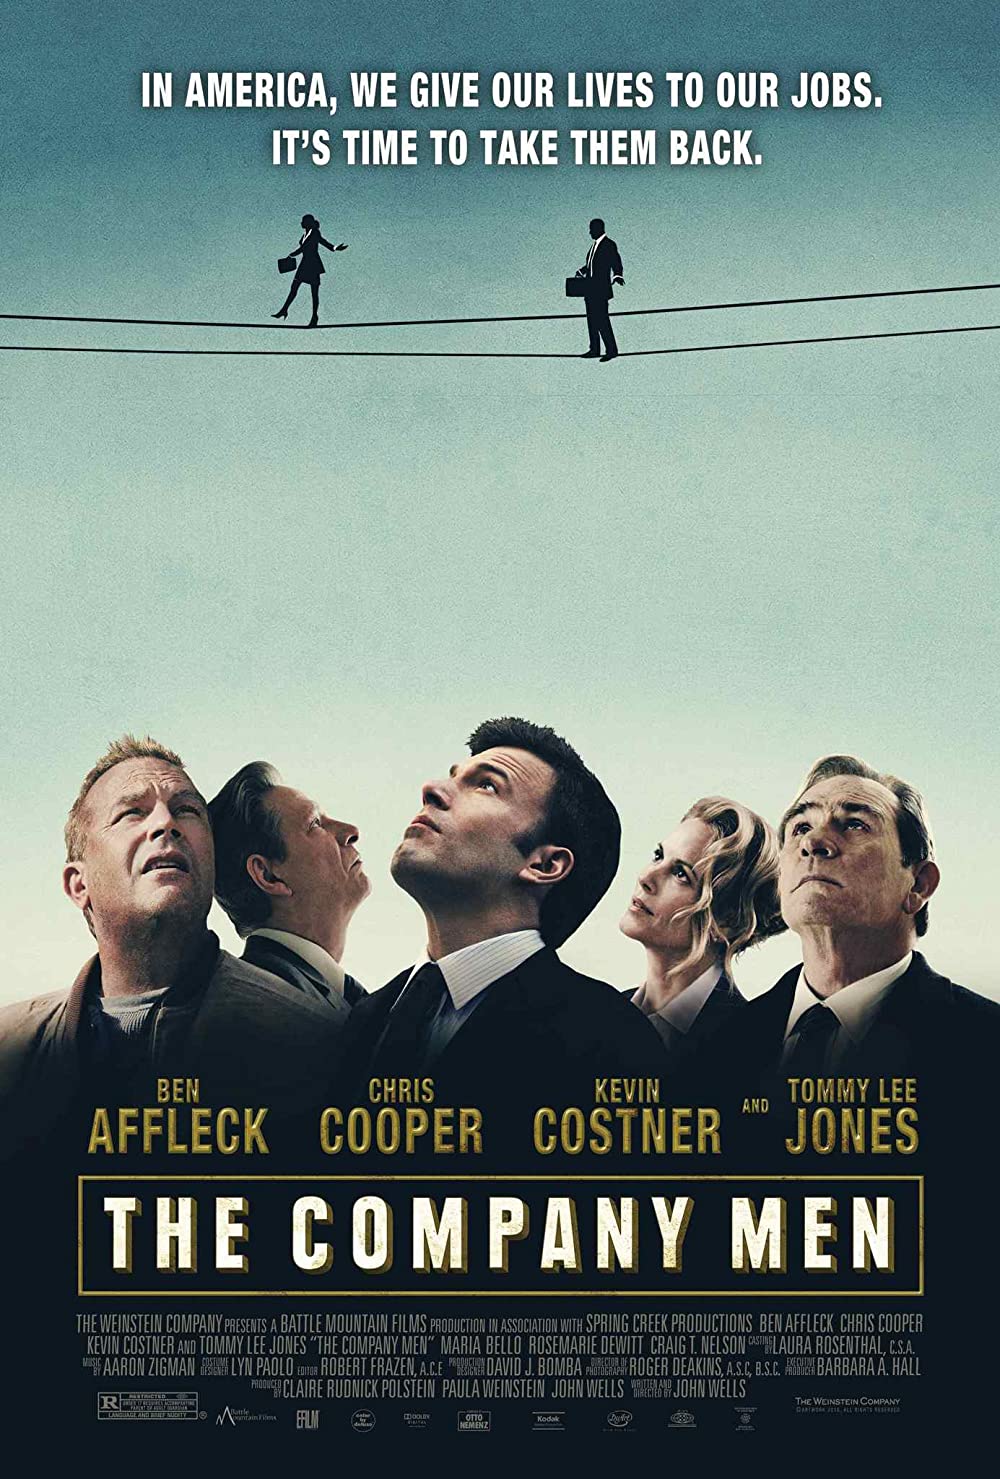 Filmbeschreibung zu The Company Men